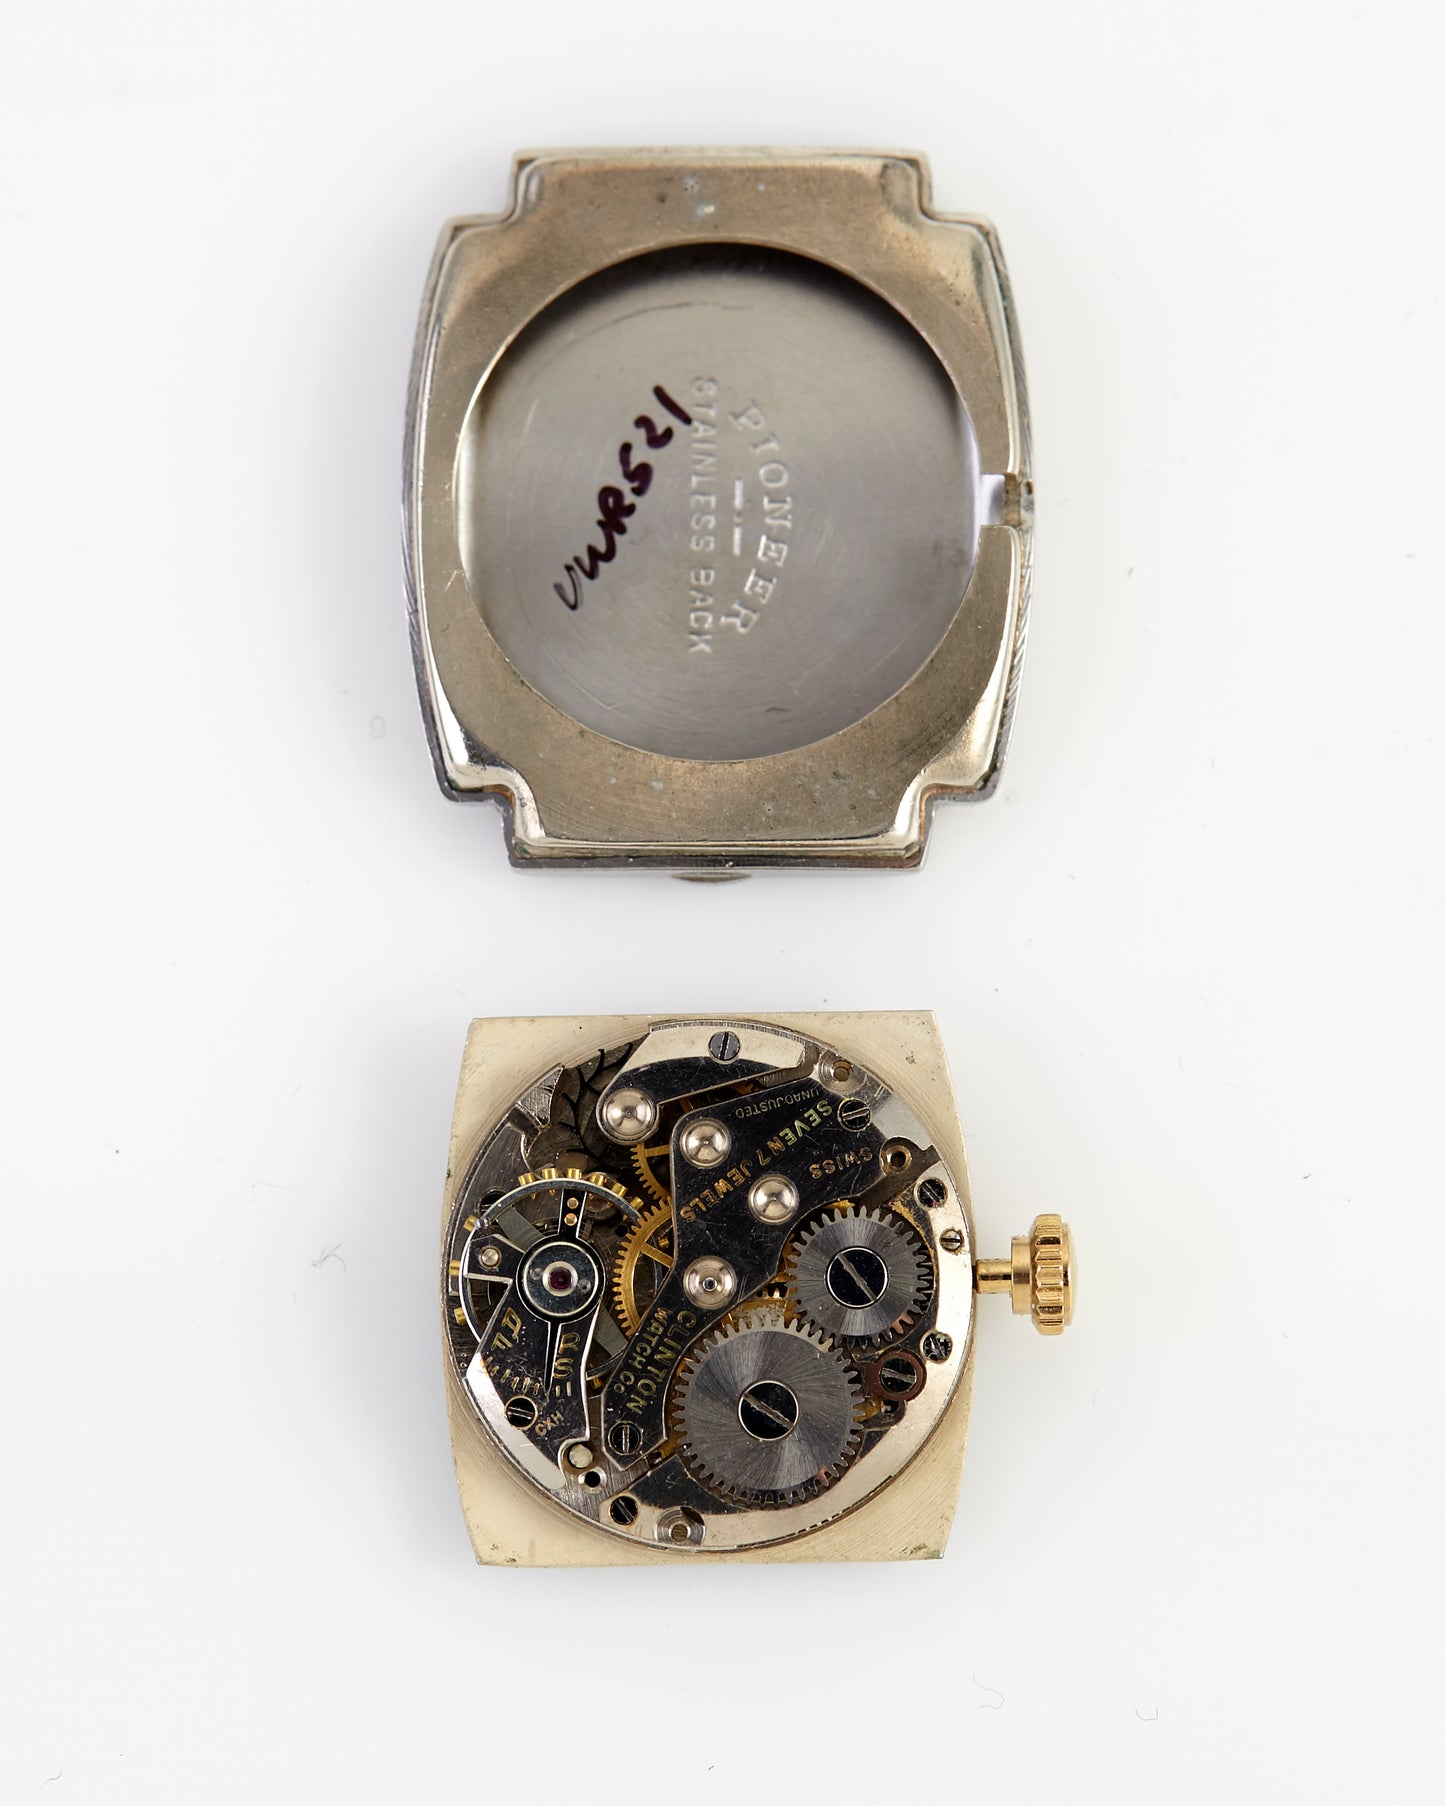 Cortebert Tonneau Manual-Wind Vintage Wristwatch